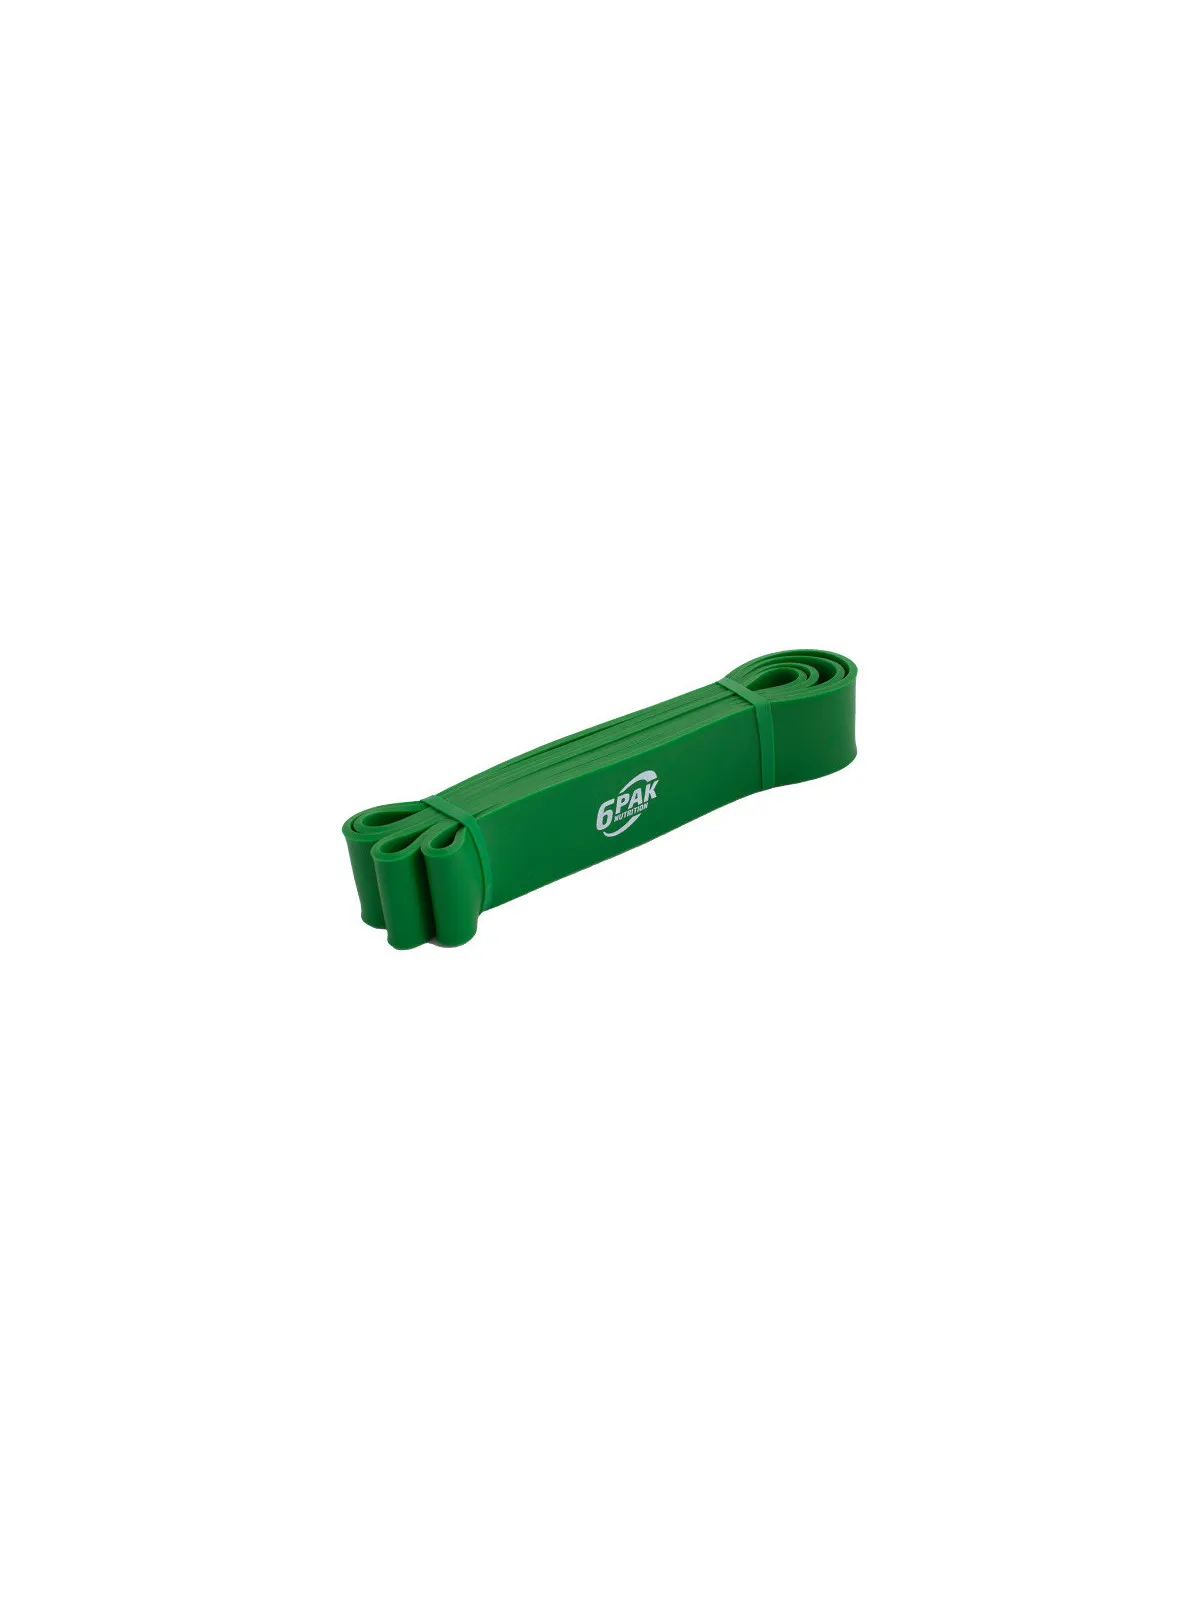 Guma oporowa zielona - opór 22-56 kg - LATEX 052 Green